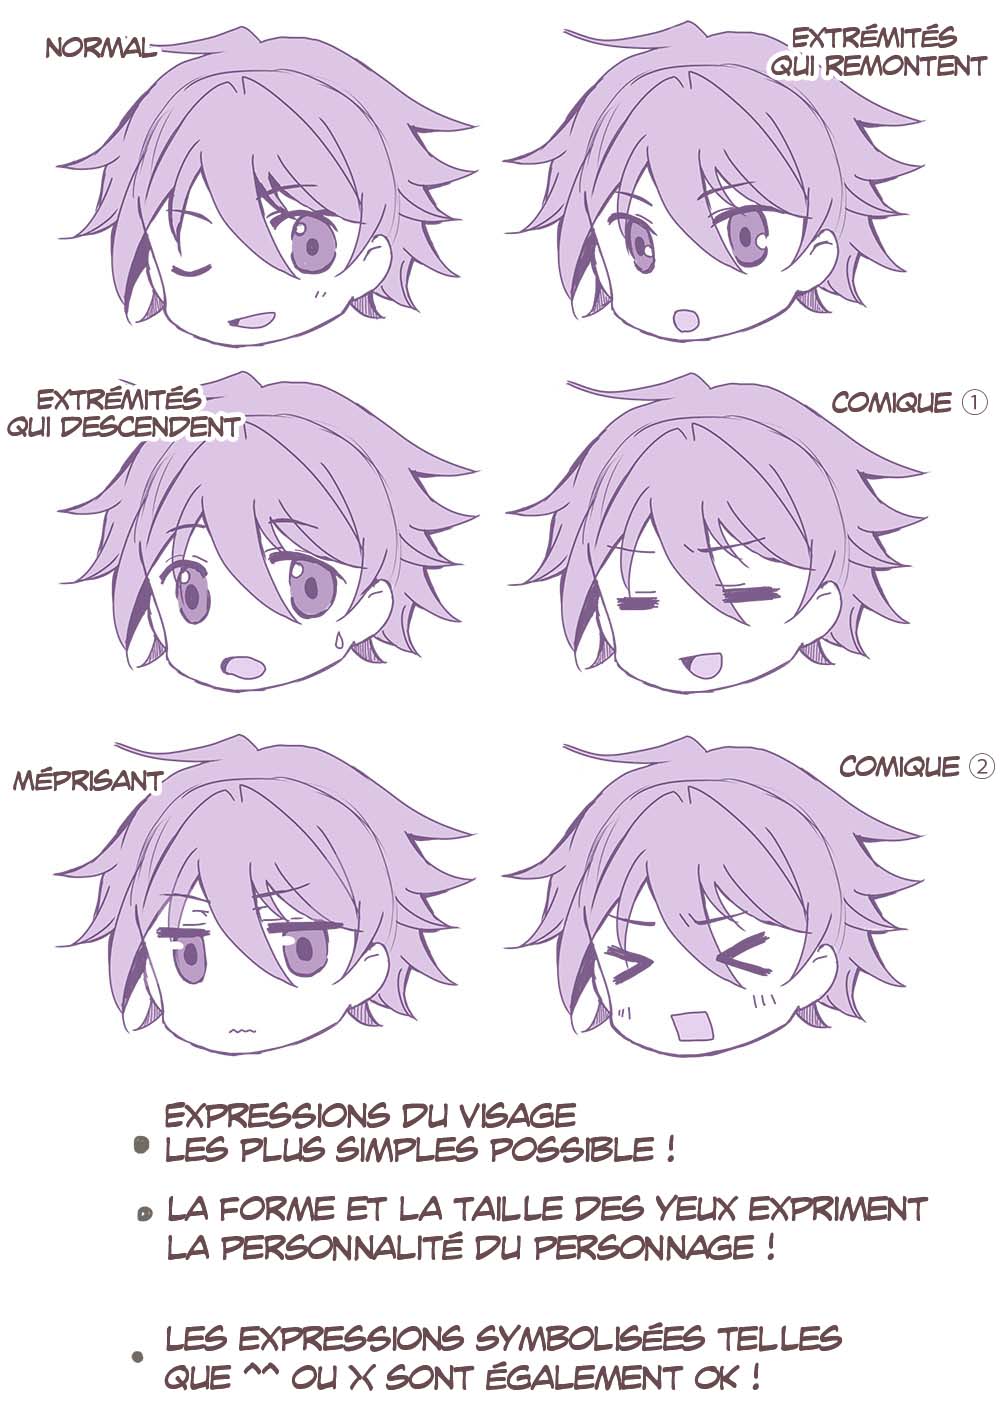 Expressions de personnage chibi